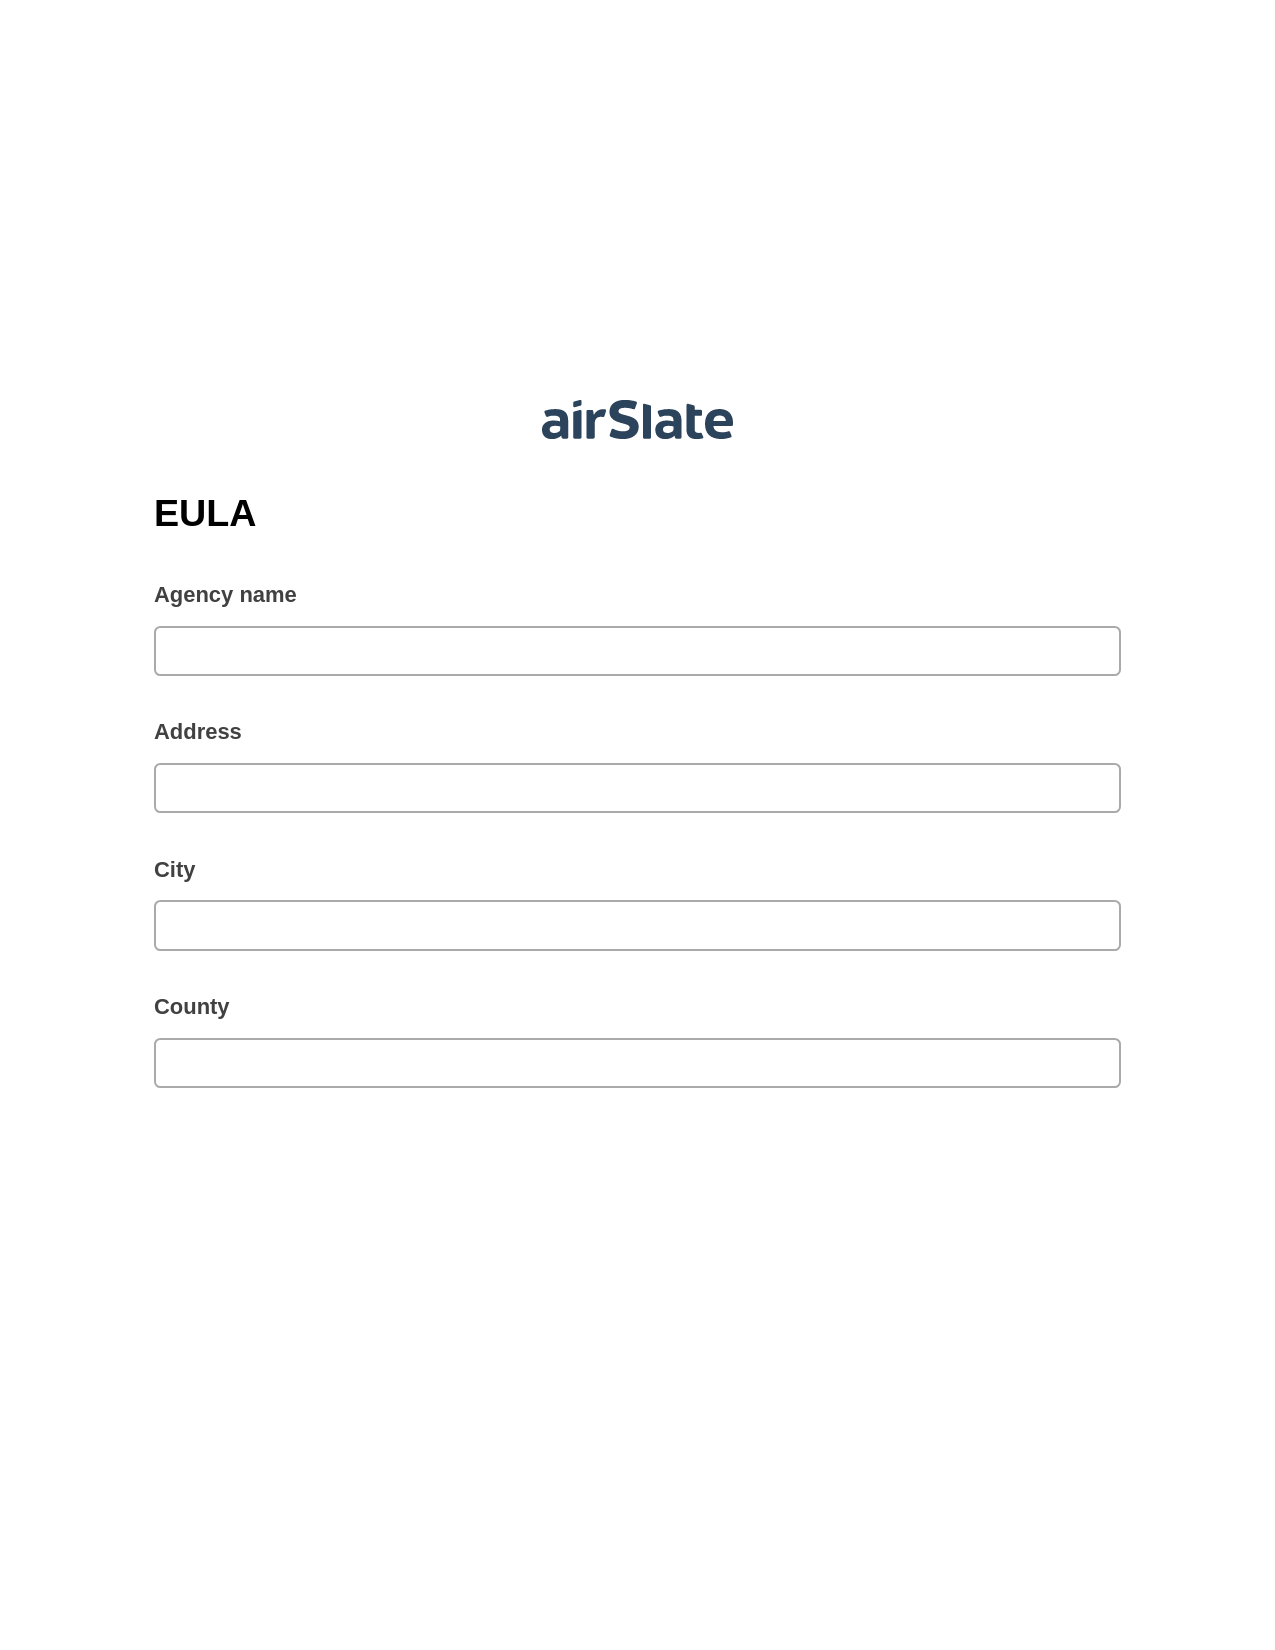 EULA Pre-fill from Google Sheet Dropdown Options Bot, Update Salesforce Record Bot, OneDrive Bot